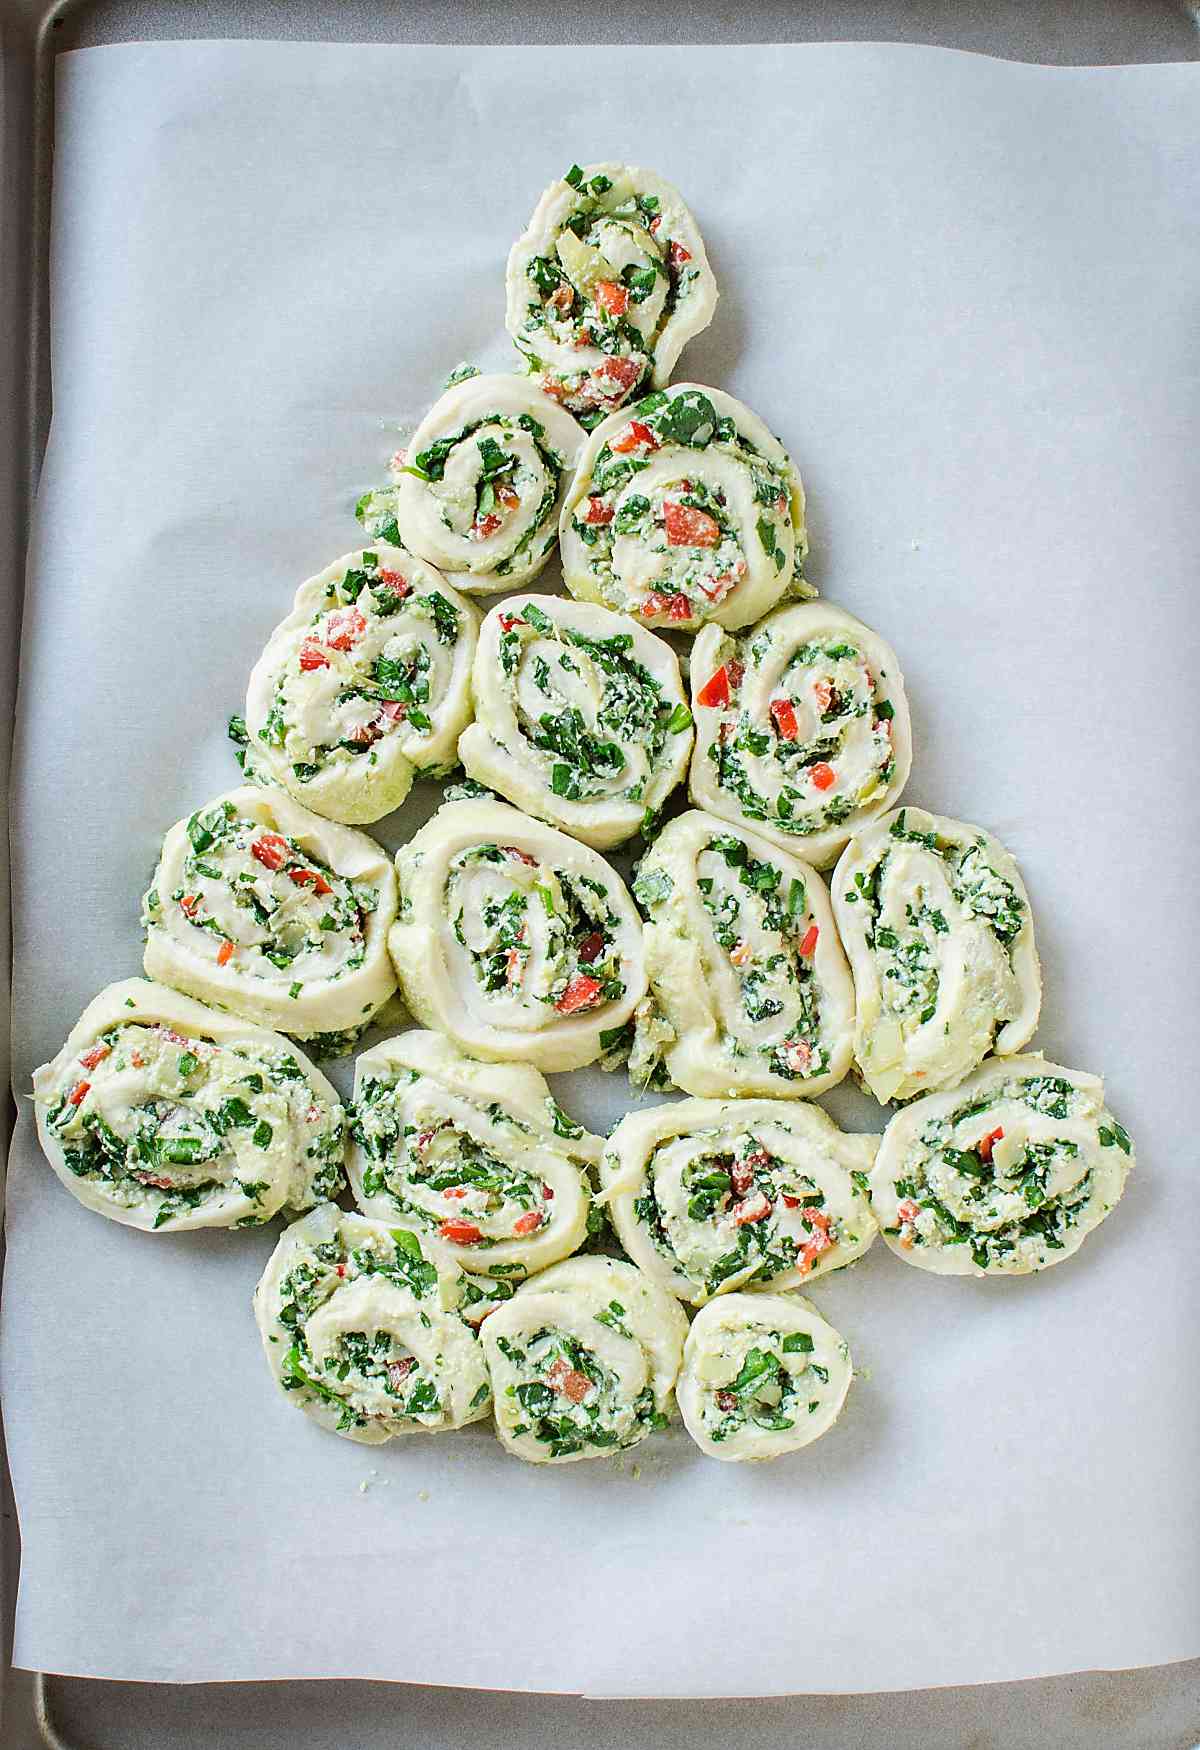 Arranging artichoke spinach pinwheels in a Christmas tree shape